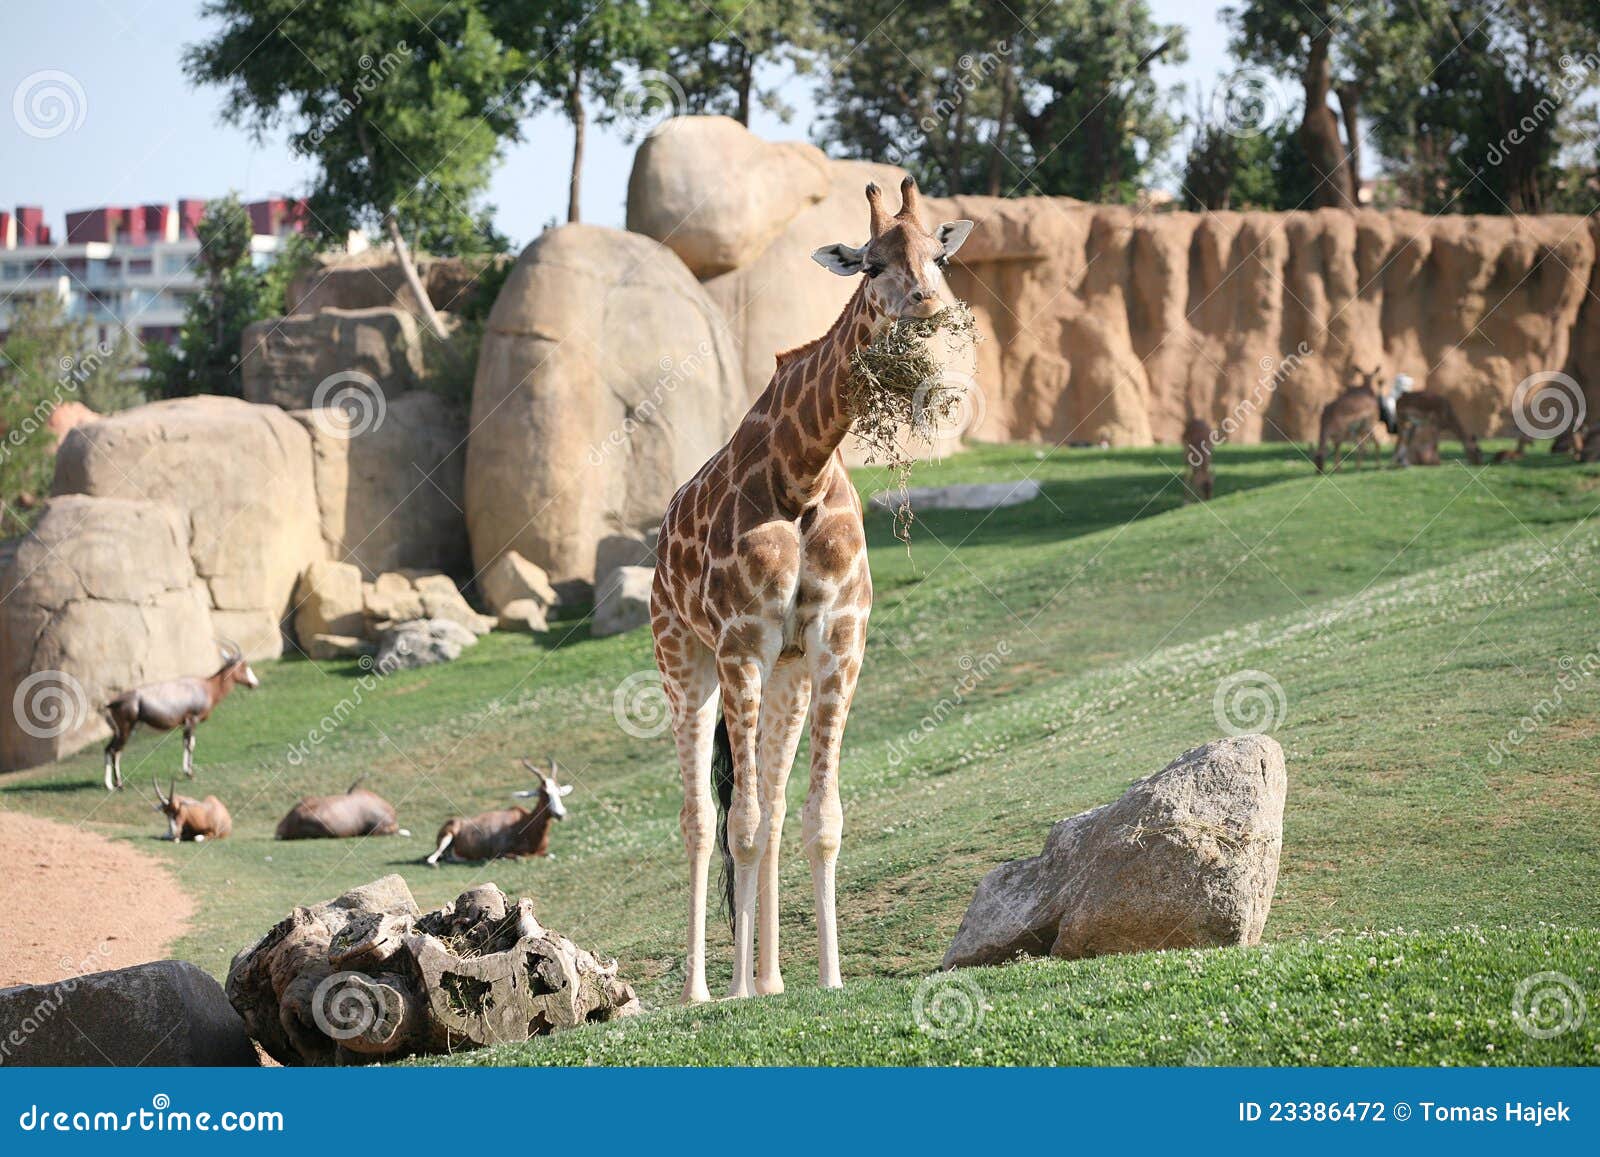 giraffe in biopark